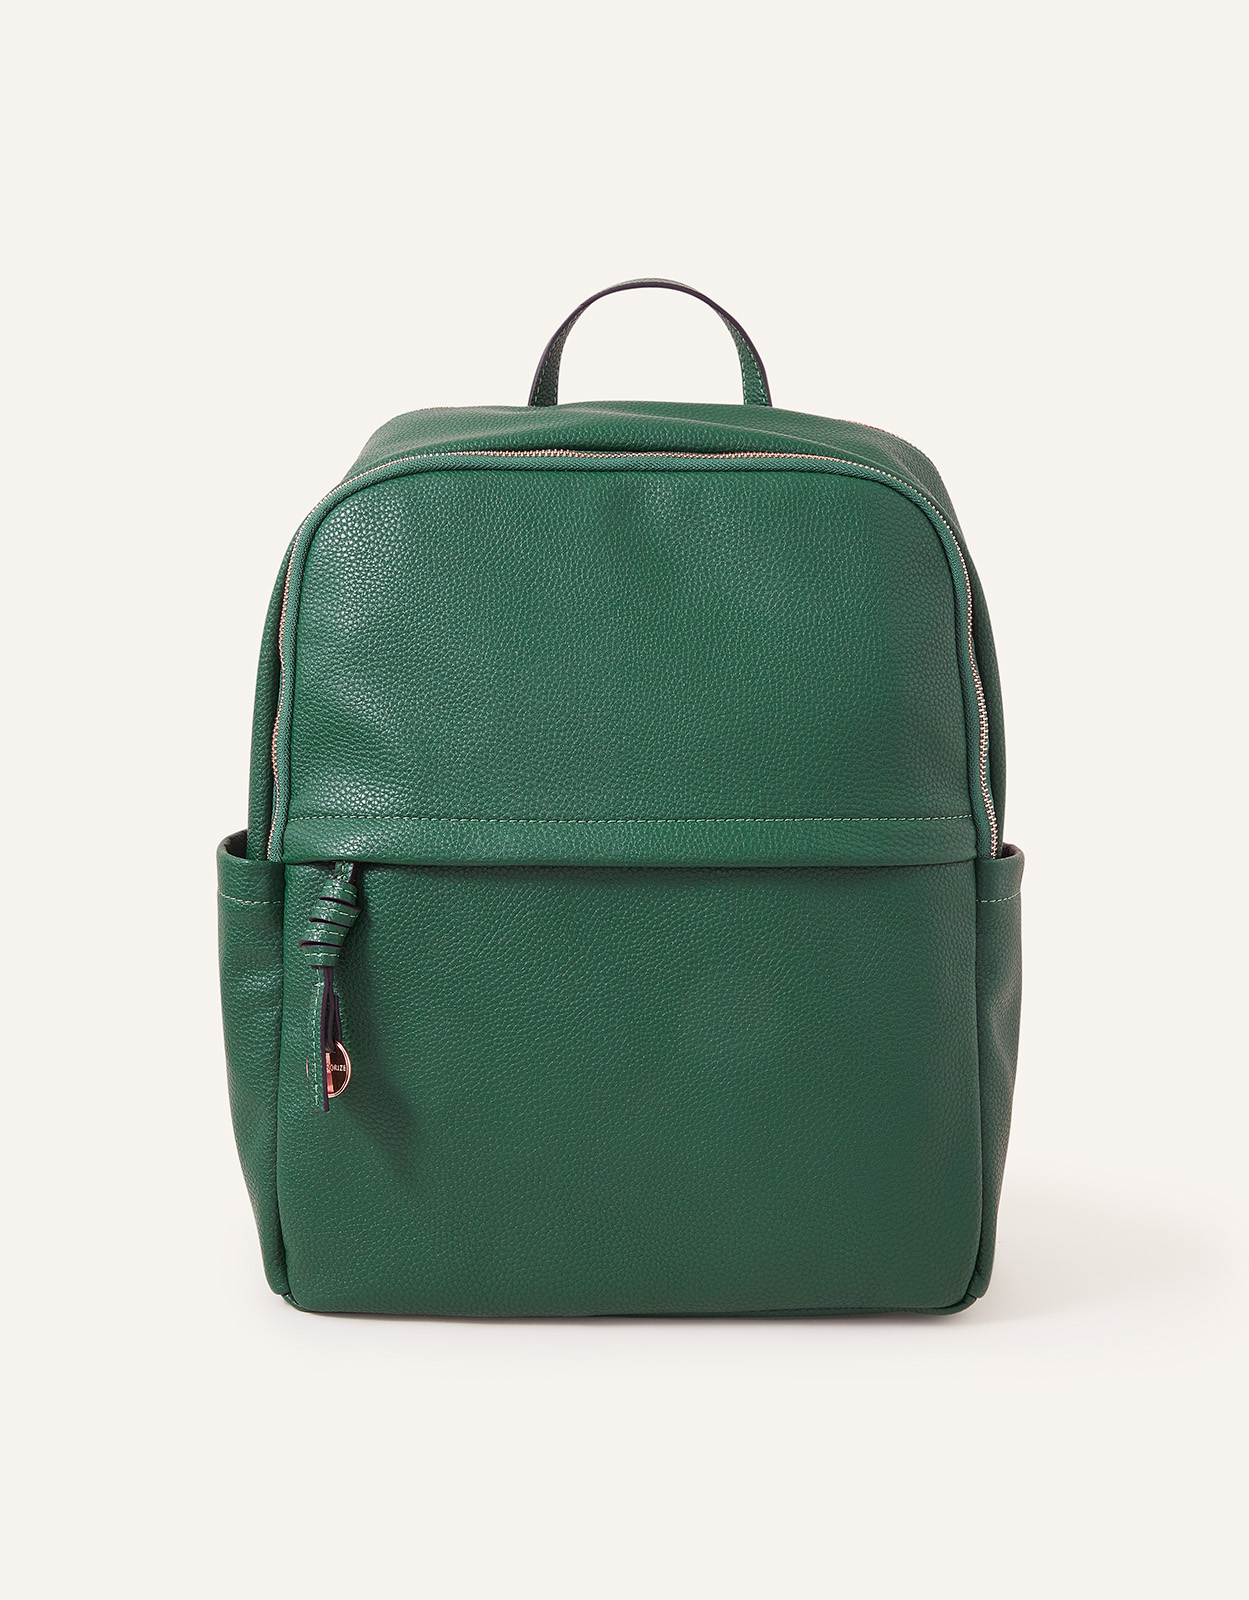 Accessorize Green Smart Zip Around Backpack, Size: 29x34cm